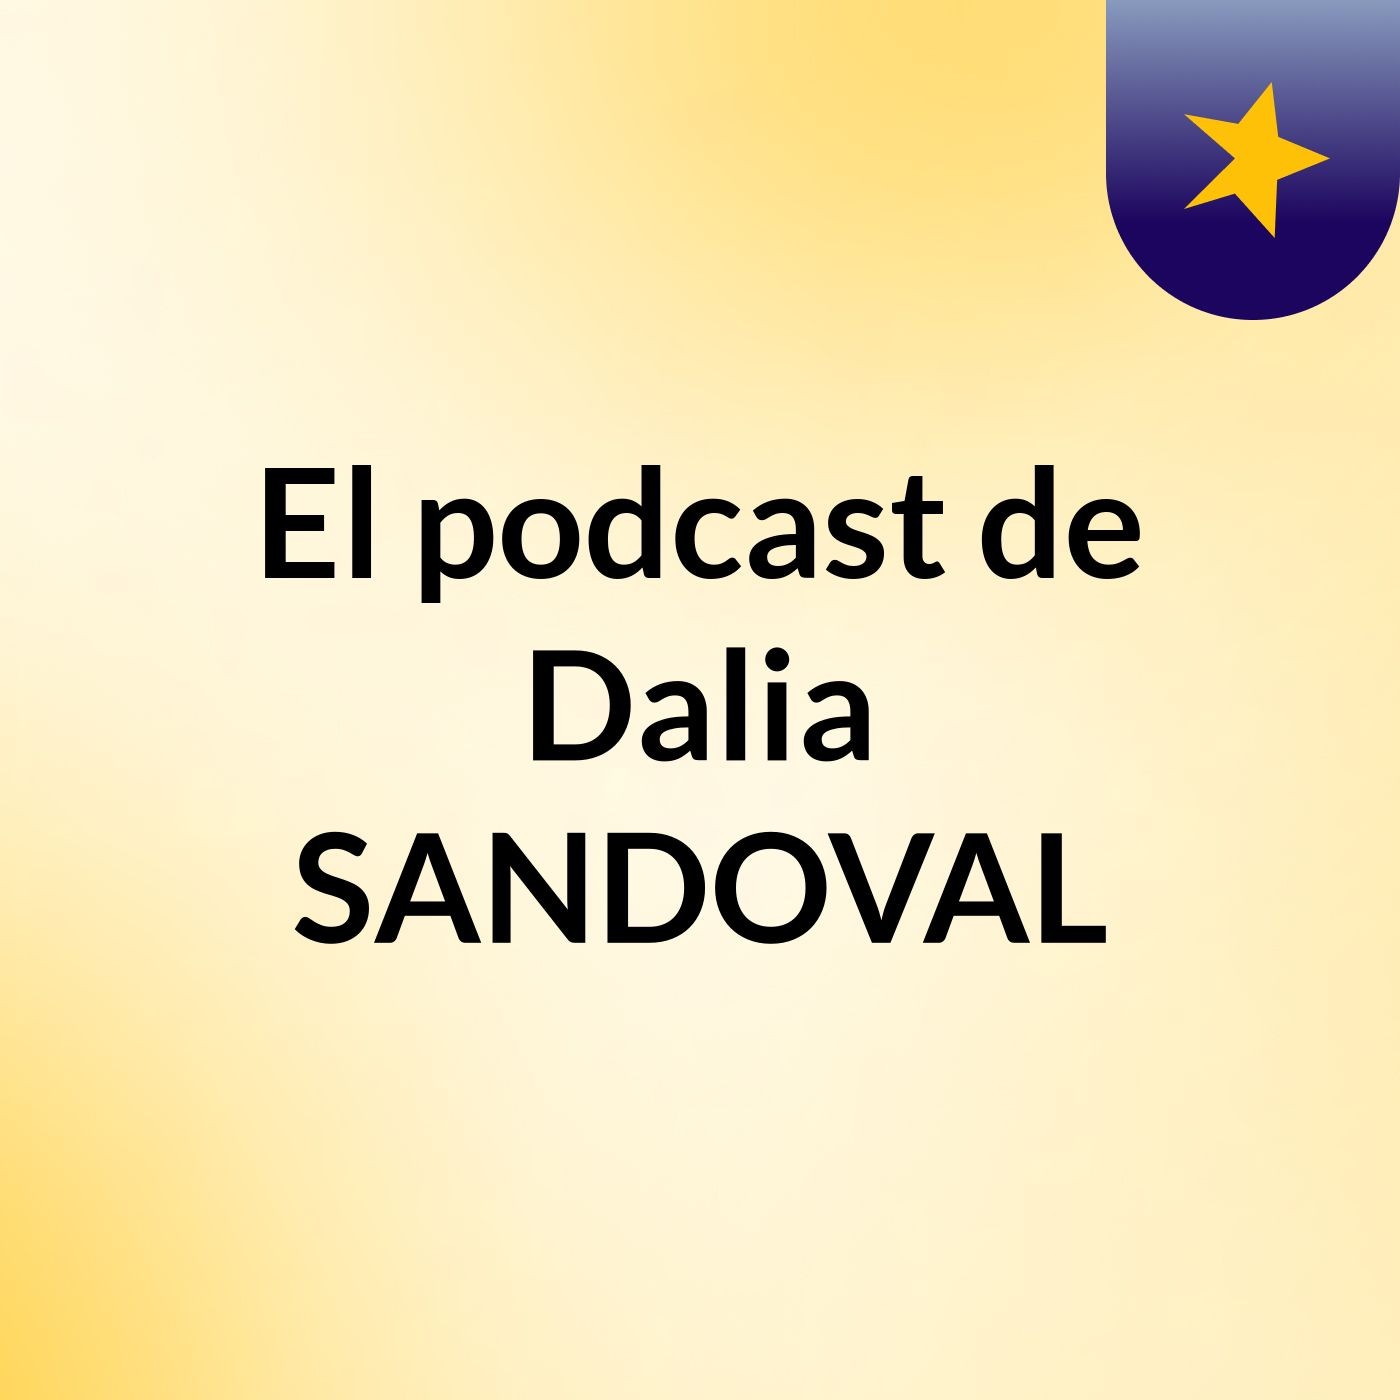 El podcast de Dalia SANDOVAL